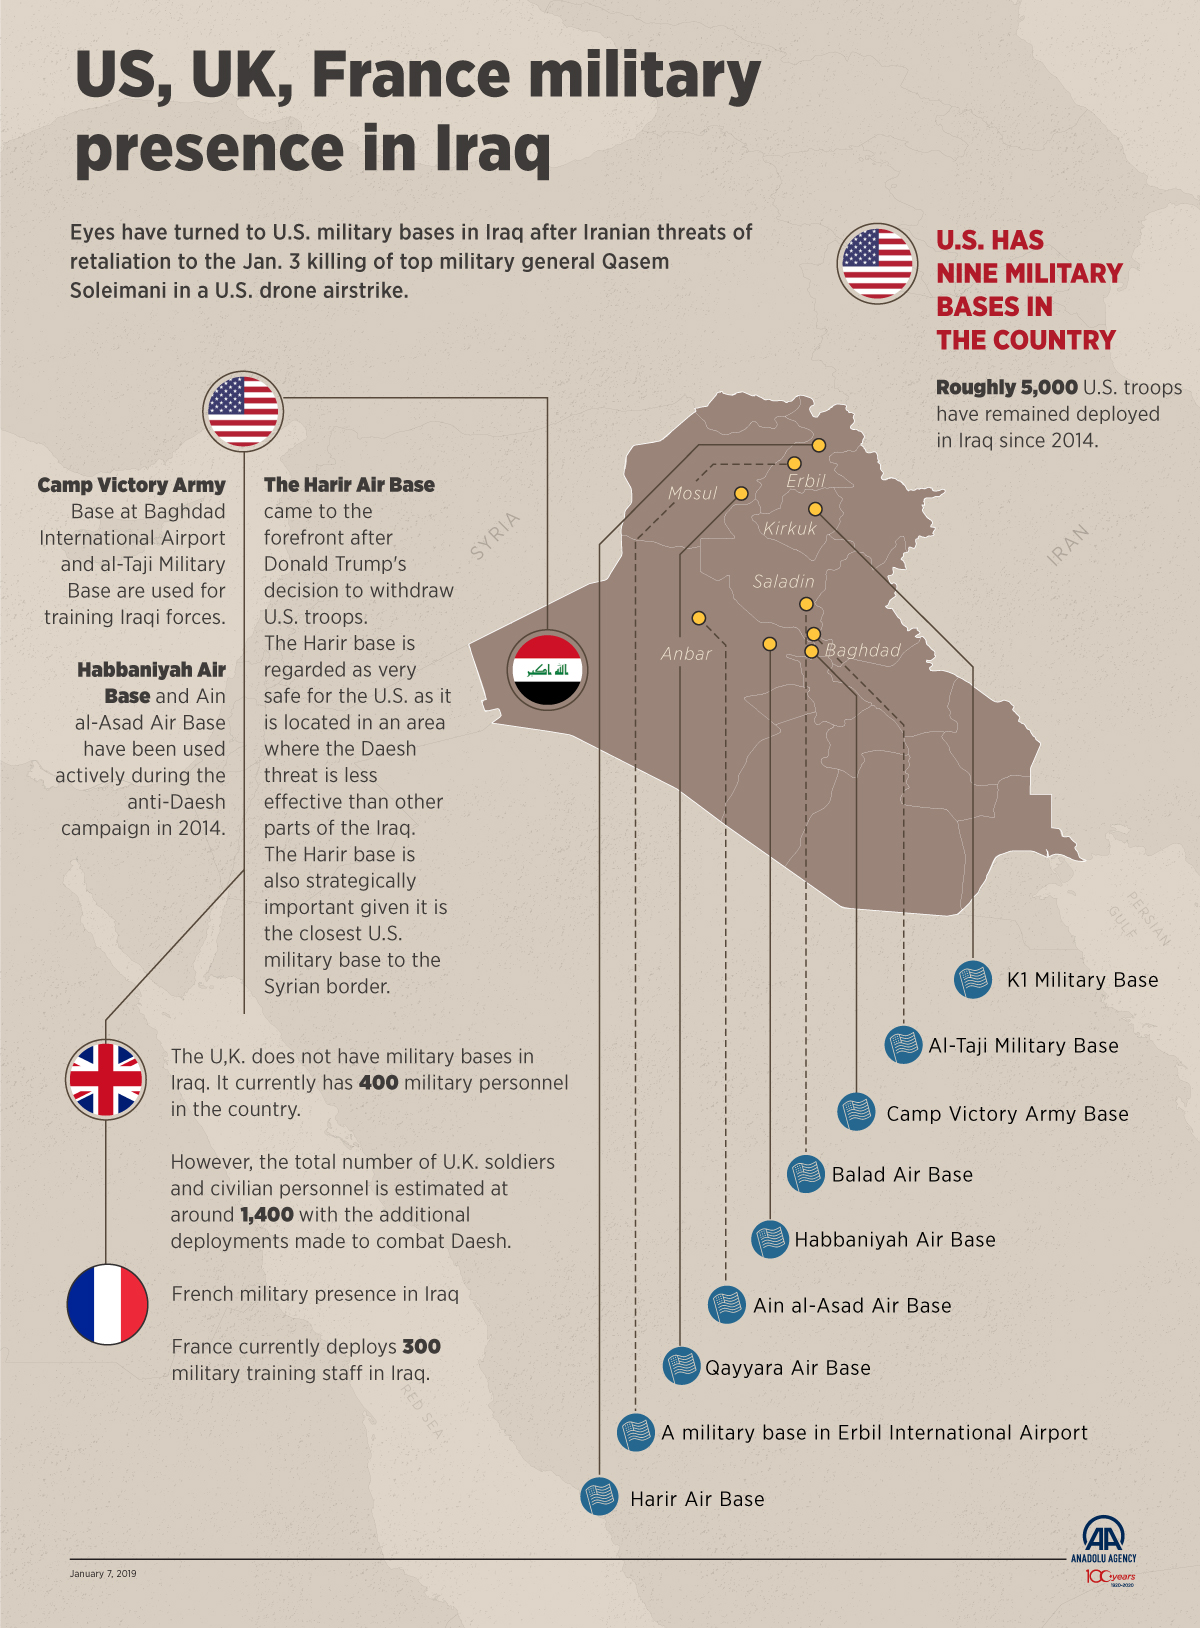 US military presence in Iraq in spotlight